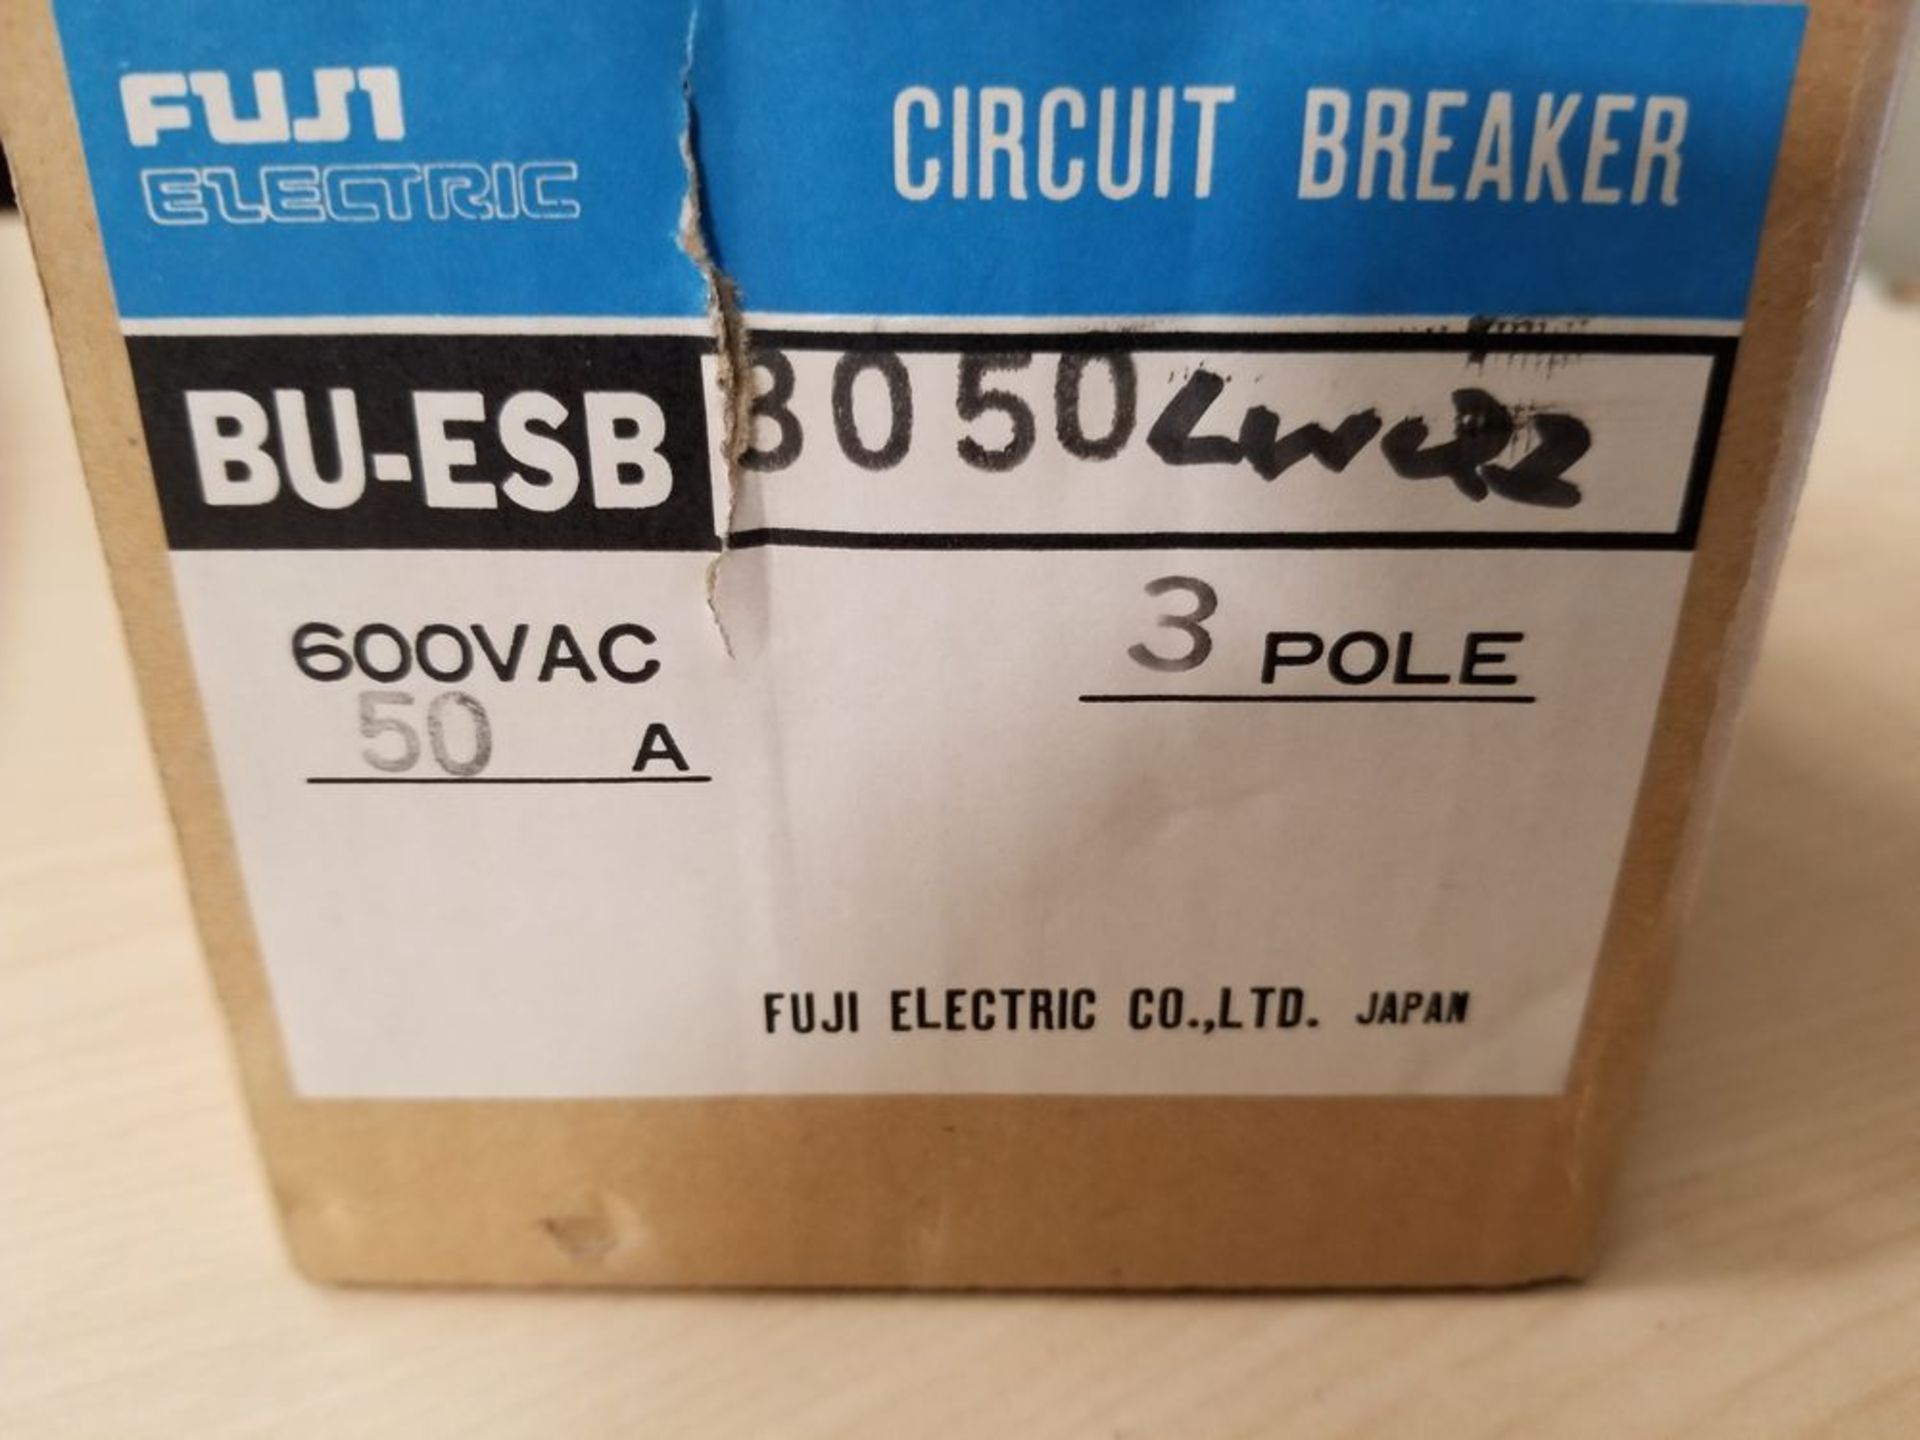 NEW FUJI BU-ESB3050 50A CIRCUIT BREAKER - Image 2 of 3